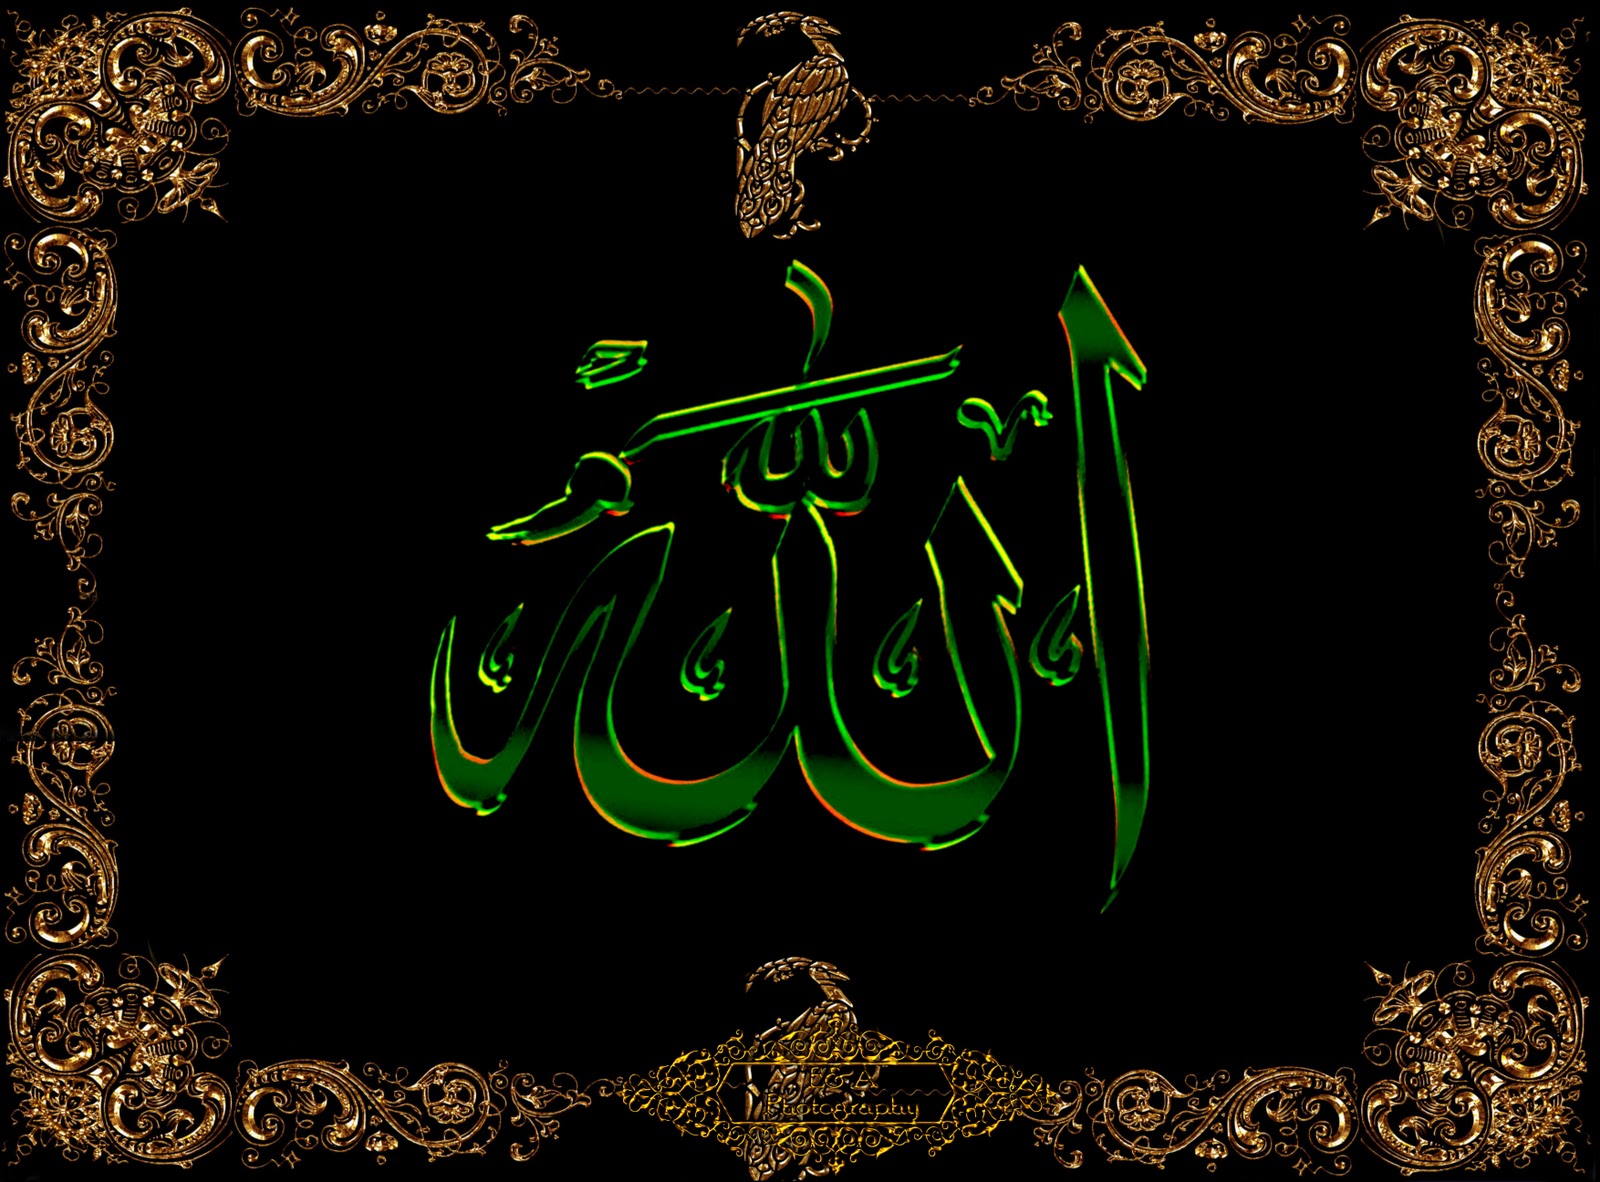 Hz что это. Аллах. Заставка Аллах. Аллах на зеленом фоне. Символ Аллаха.